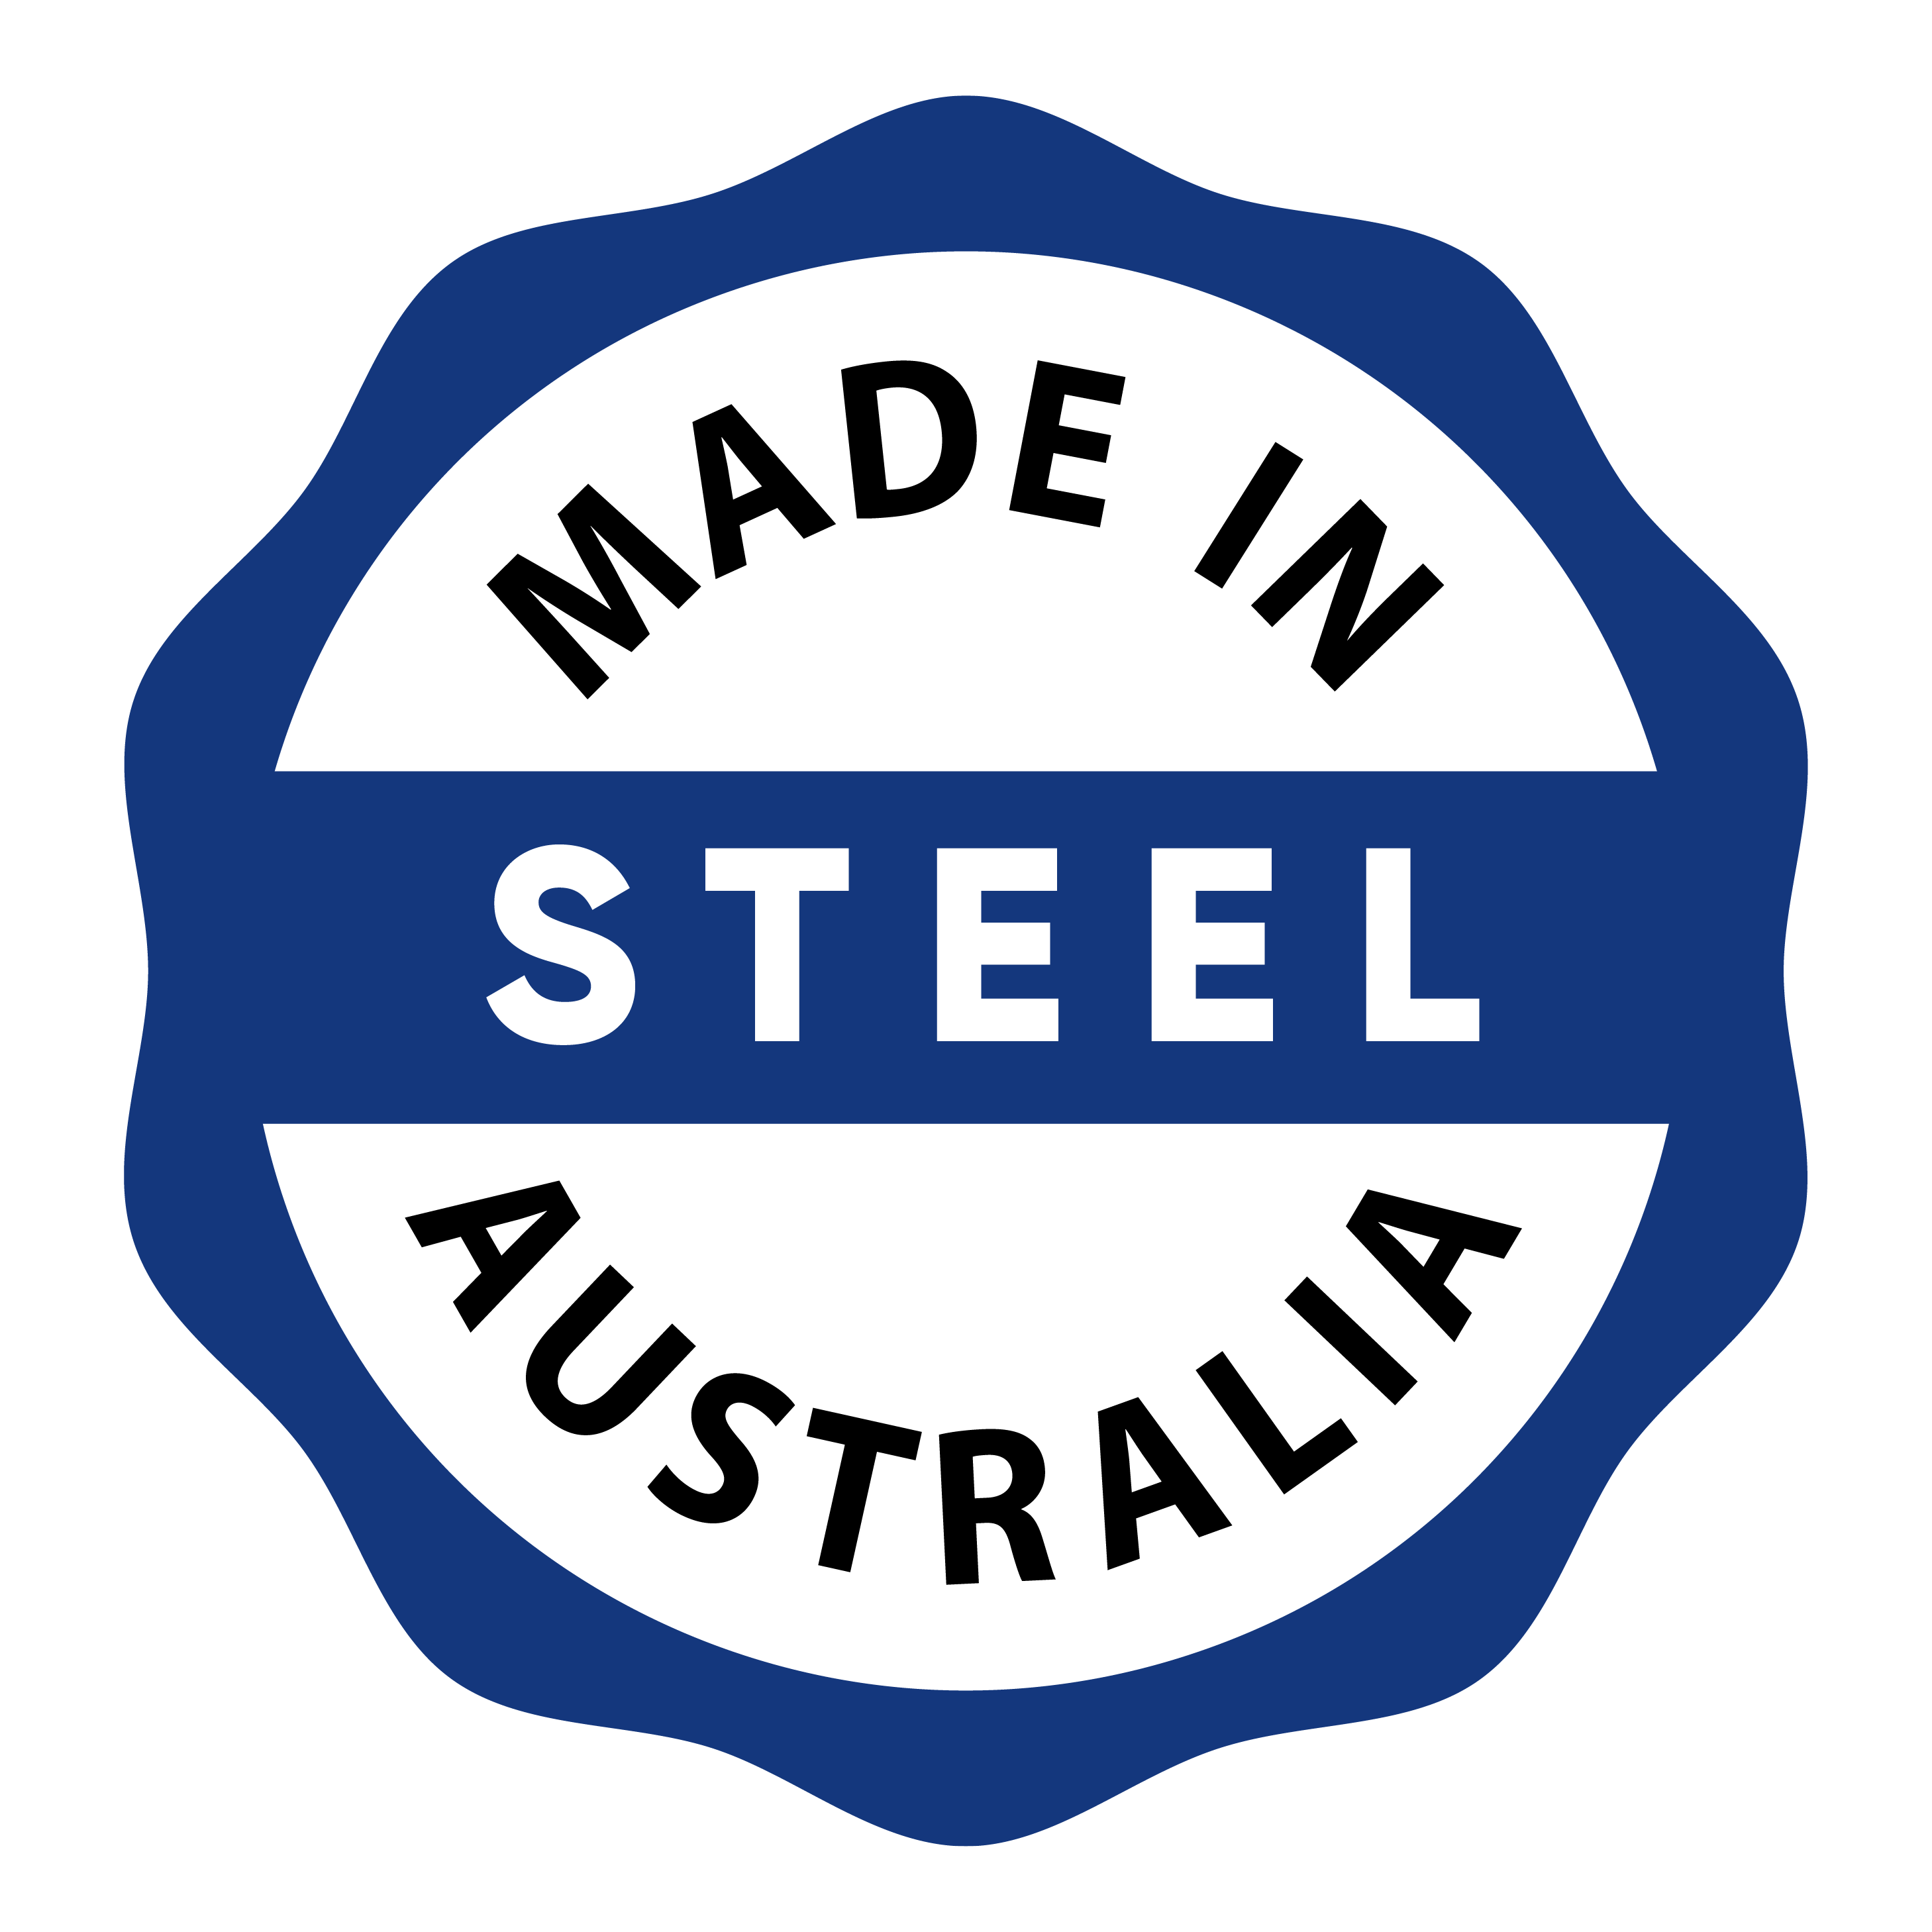 Made In Australia steel